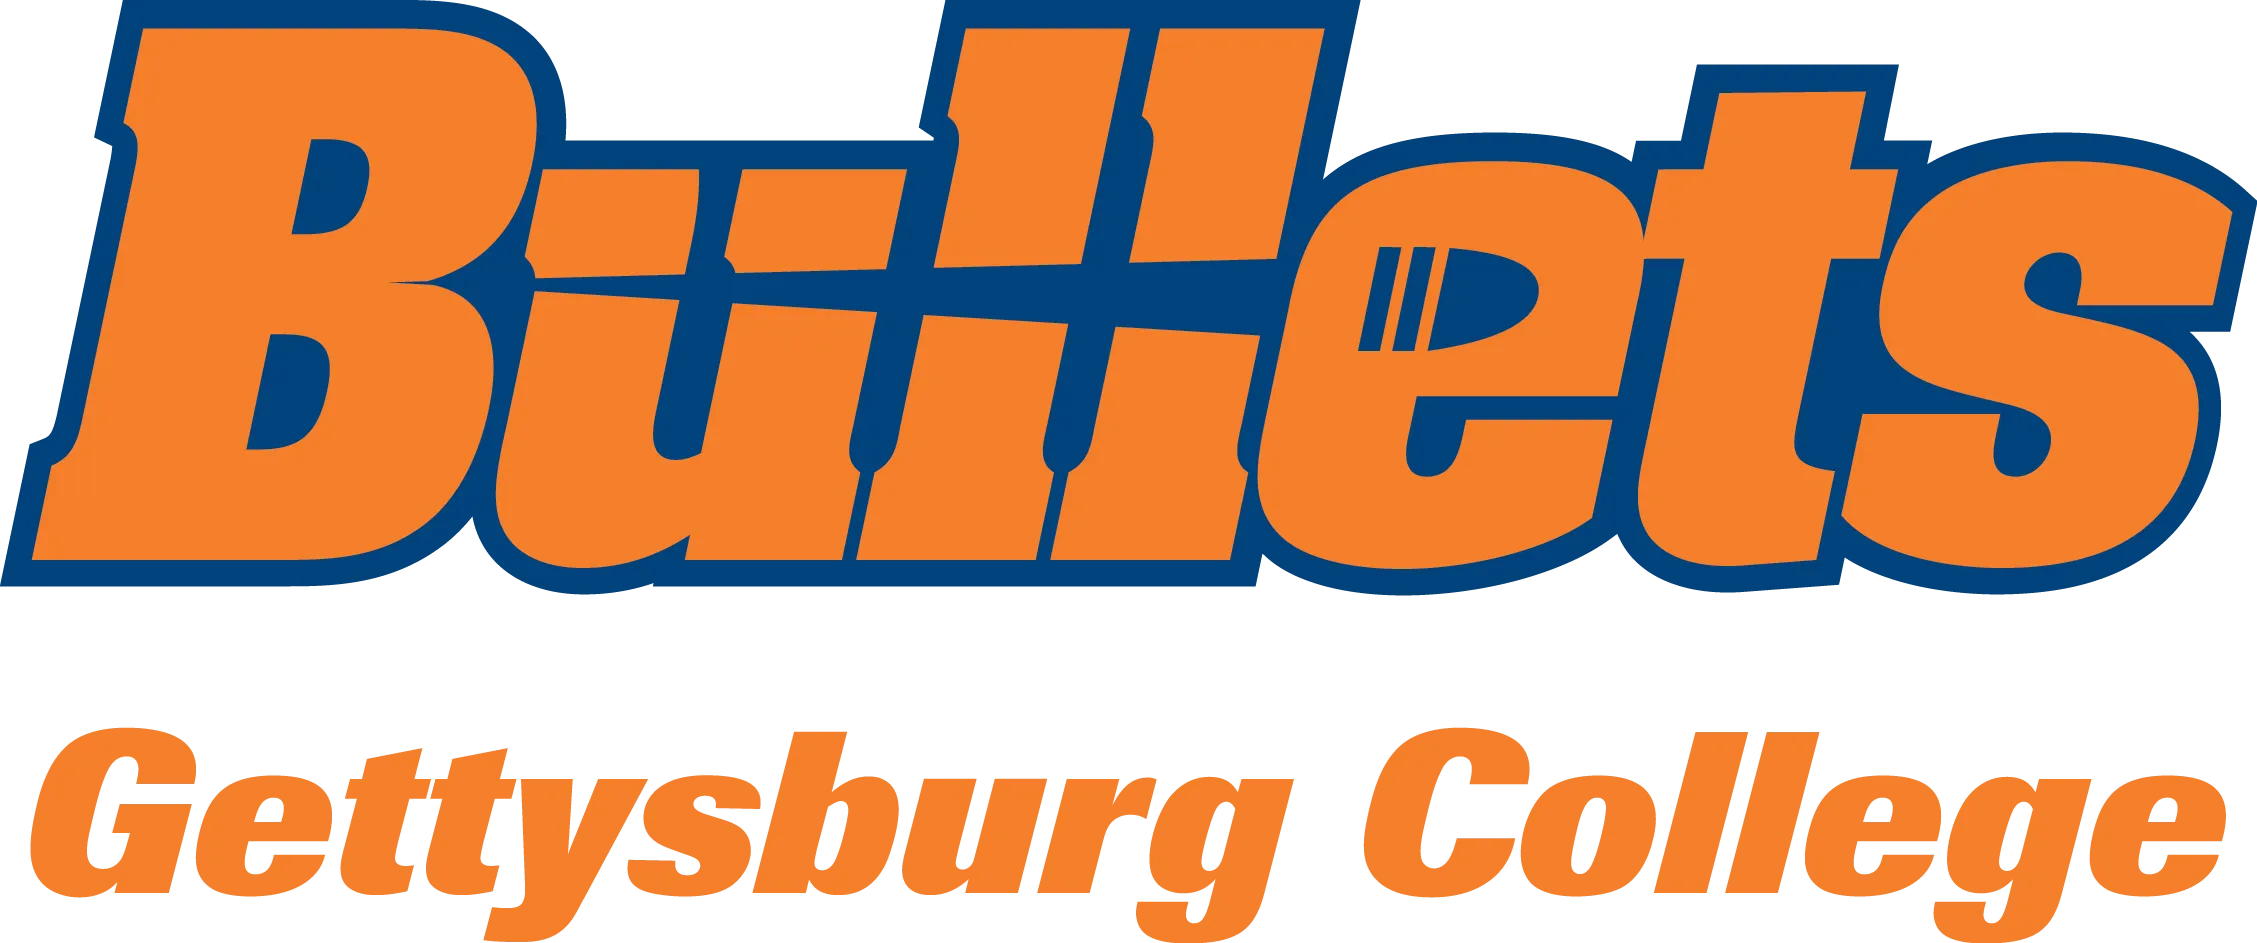 gettysburg-bullets-logo